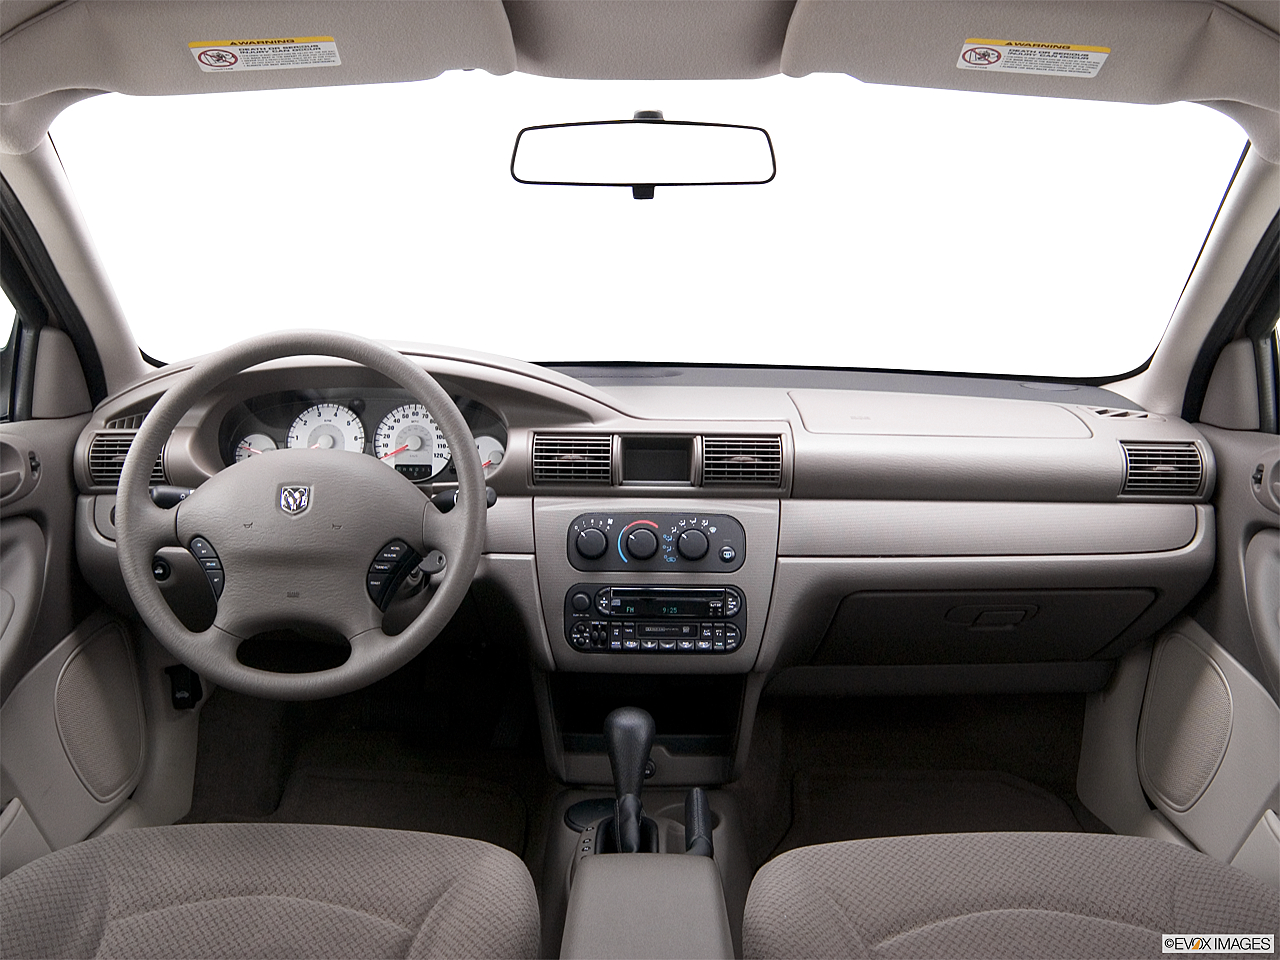 2005 Dodge Stratus SXT 4dr Sedan - Research - GrooveCar